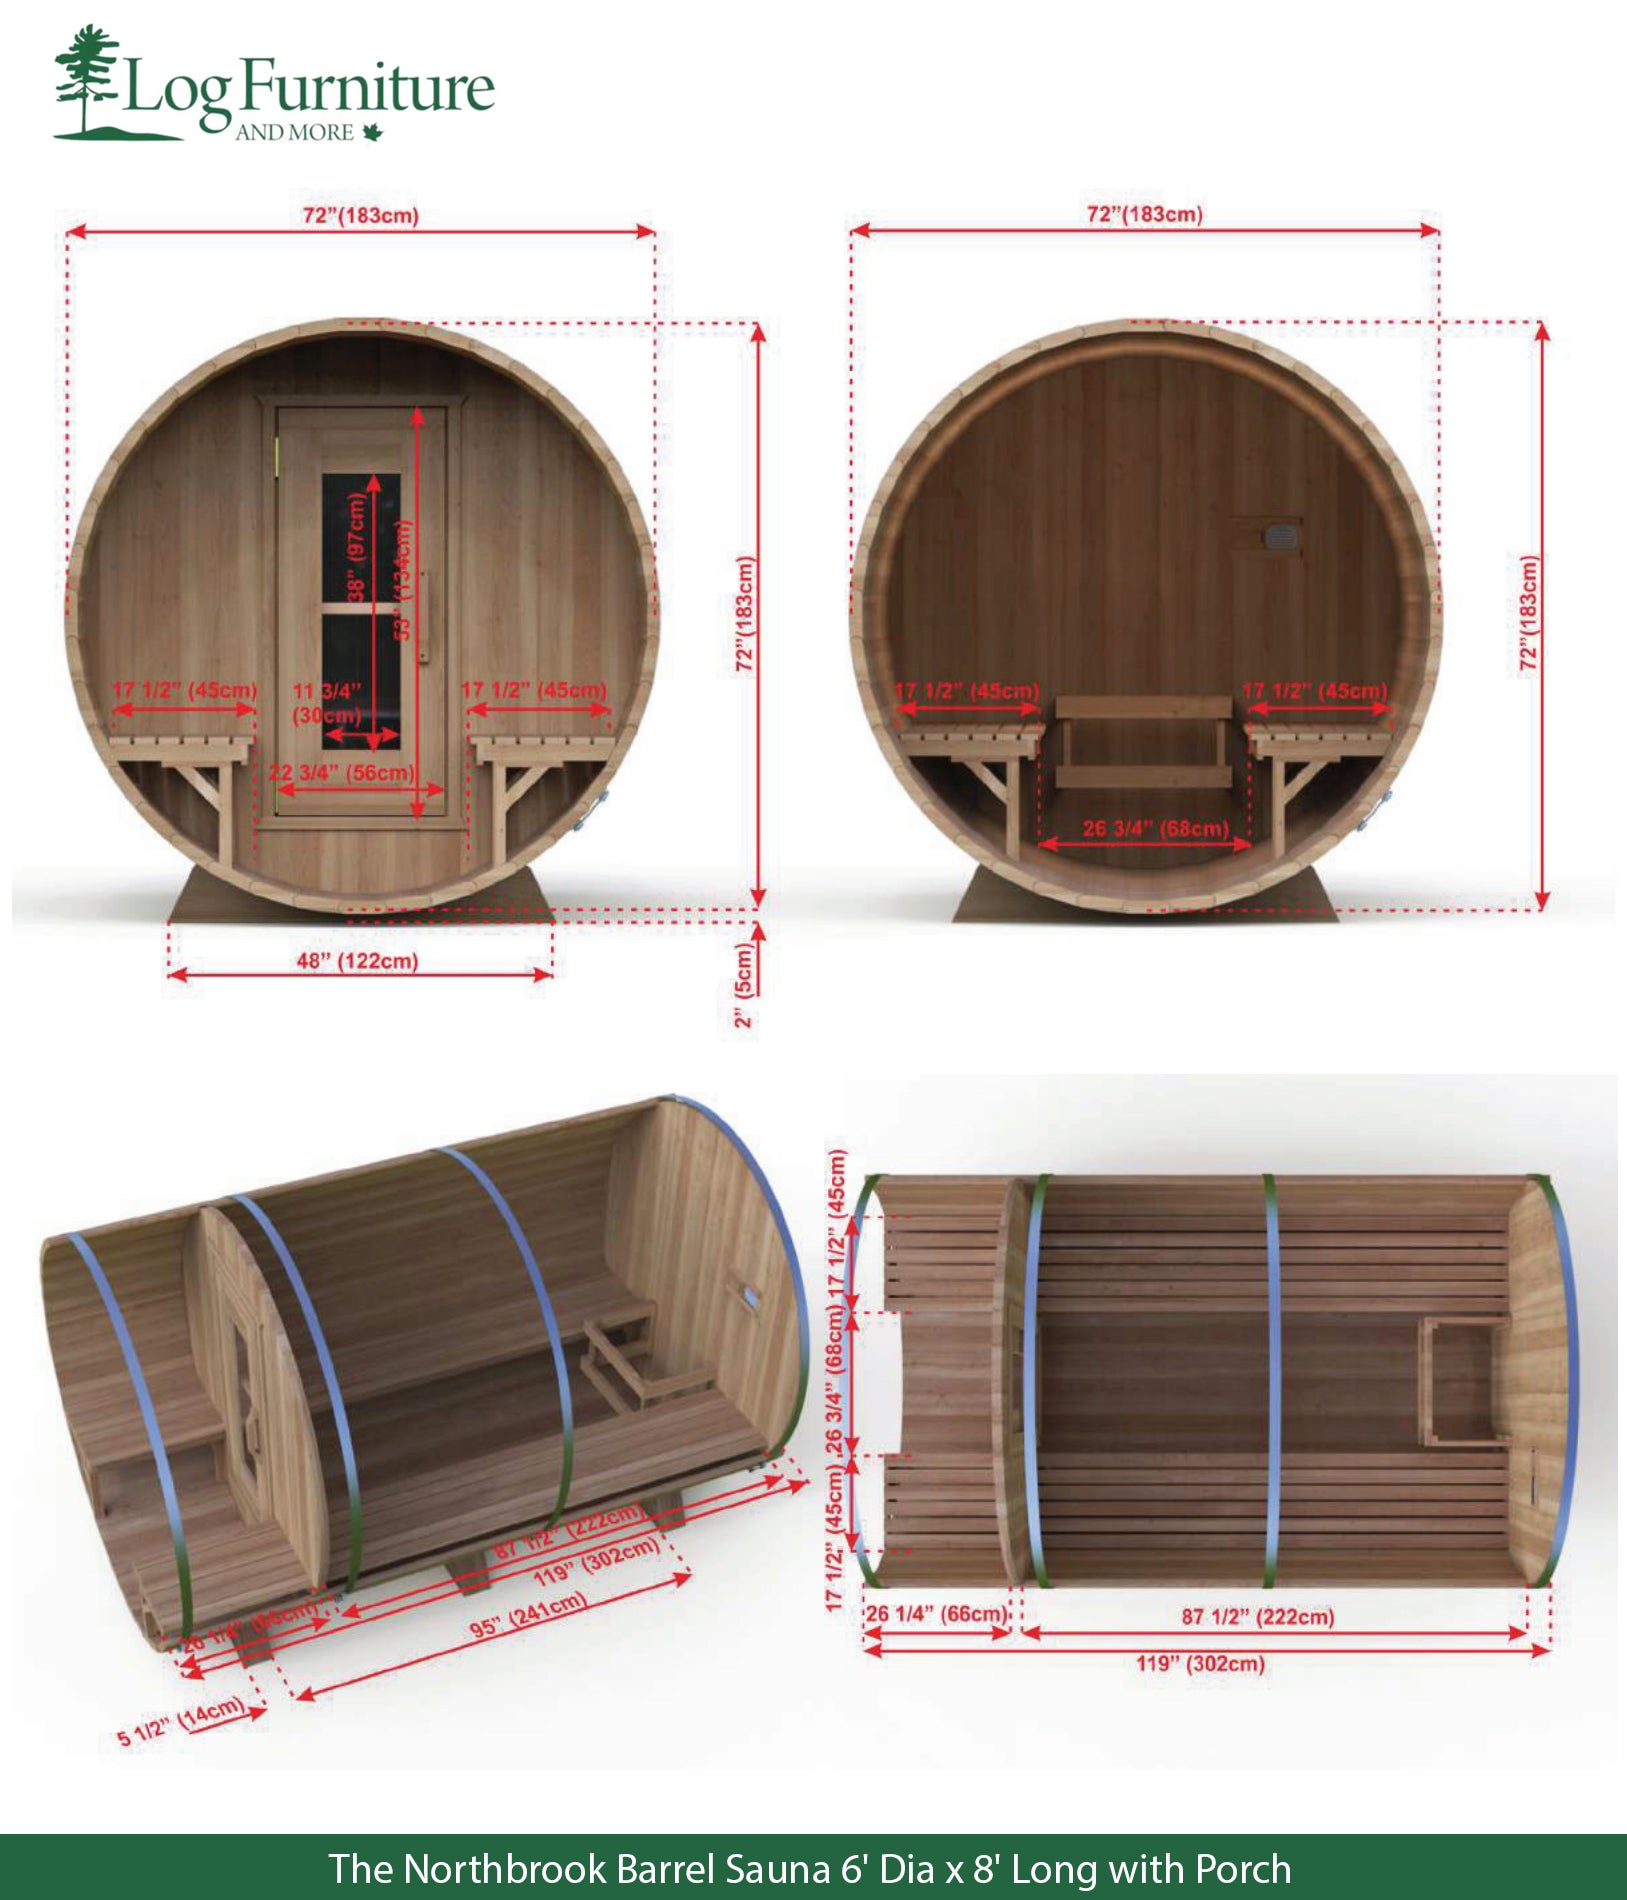 The Northbrook Barrel Sauna 6' Dia x 8' Long with Porch